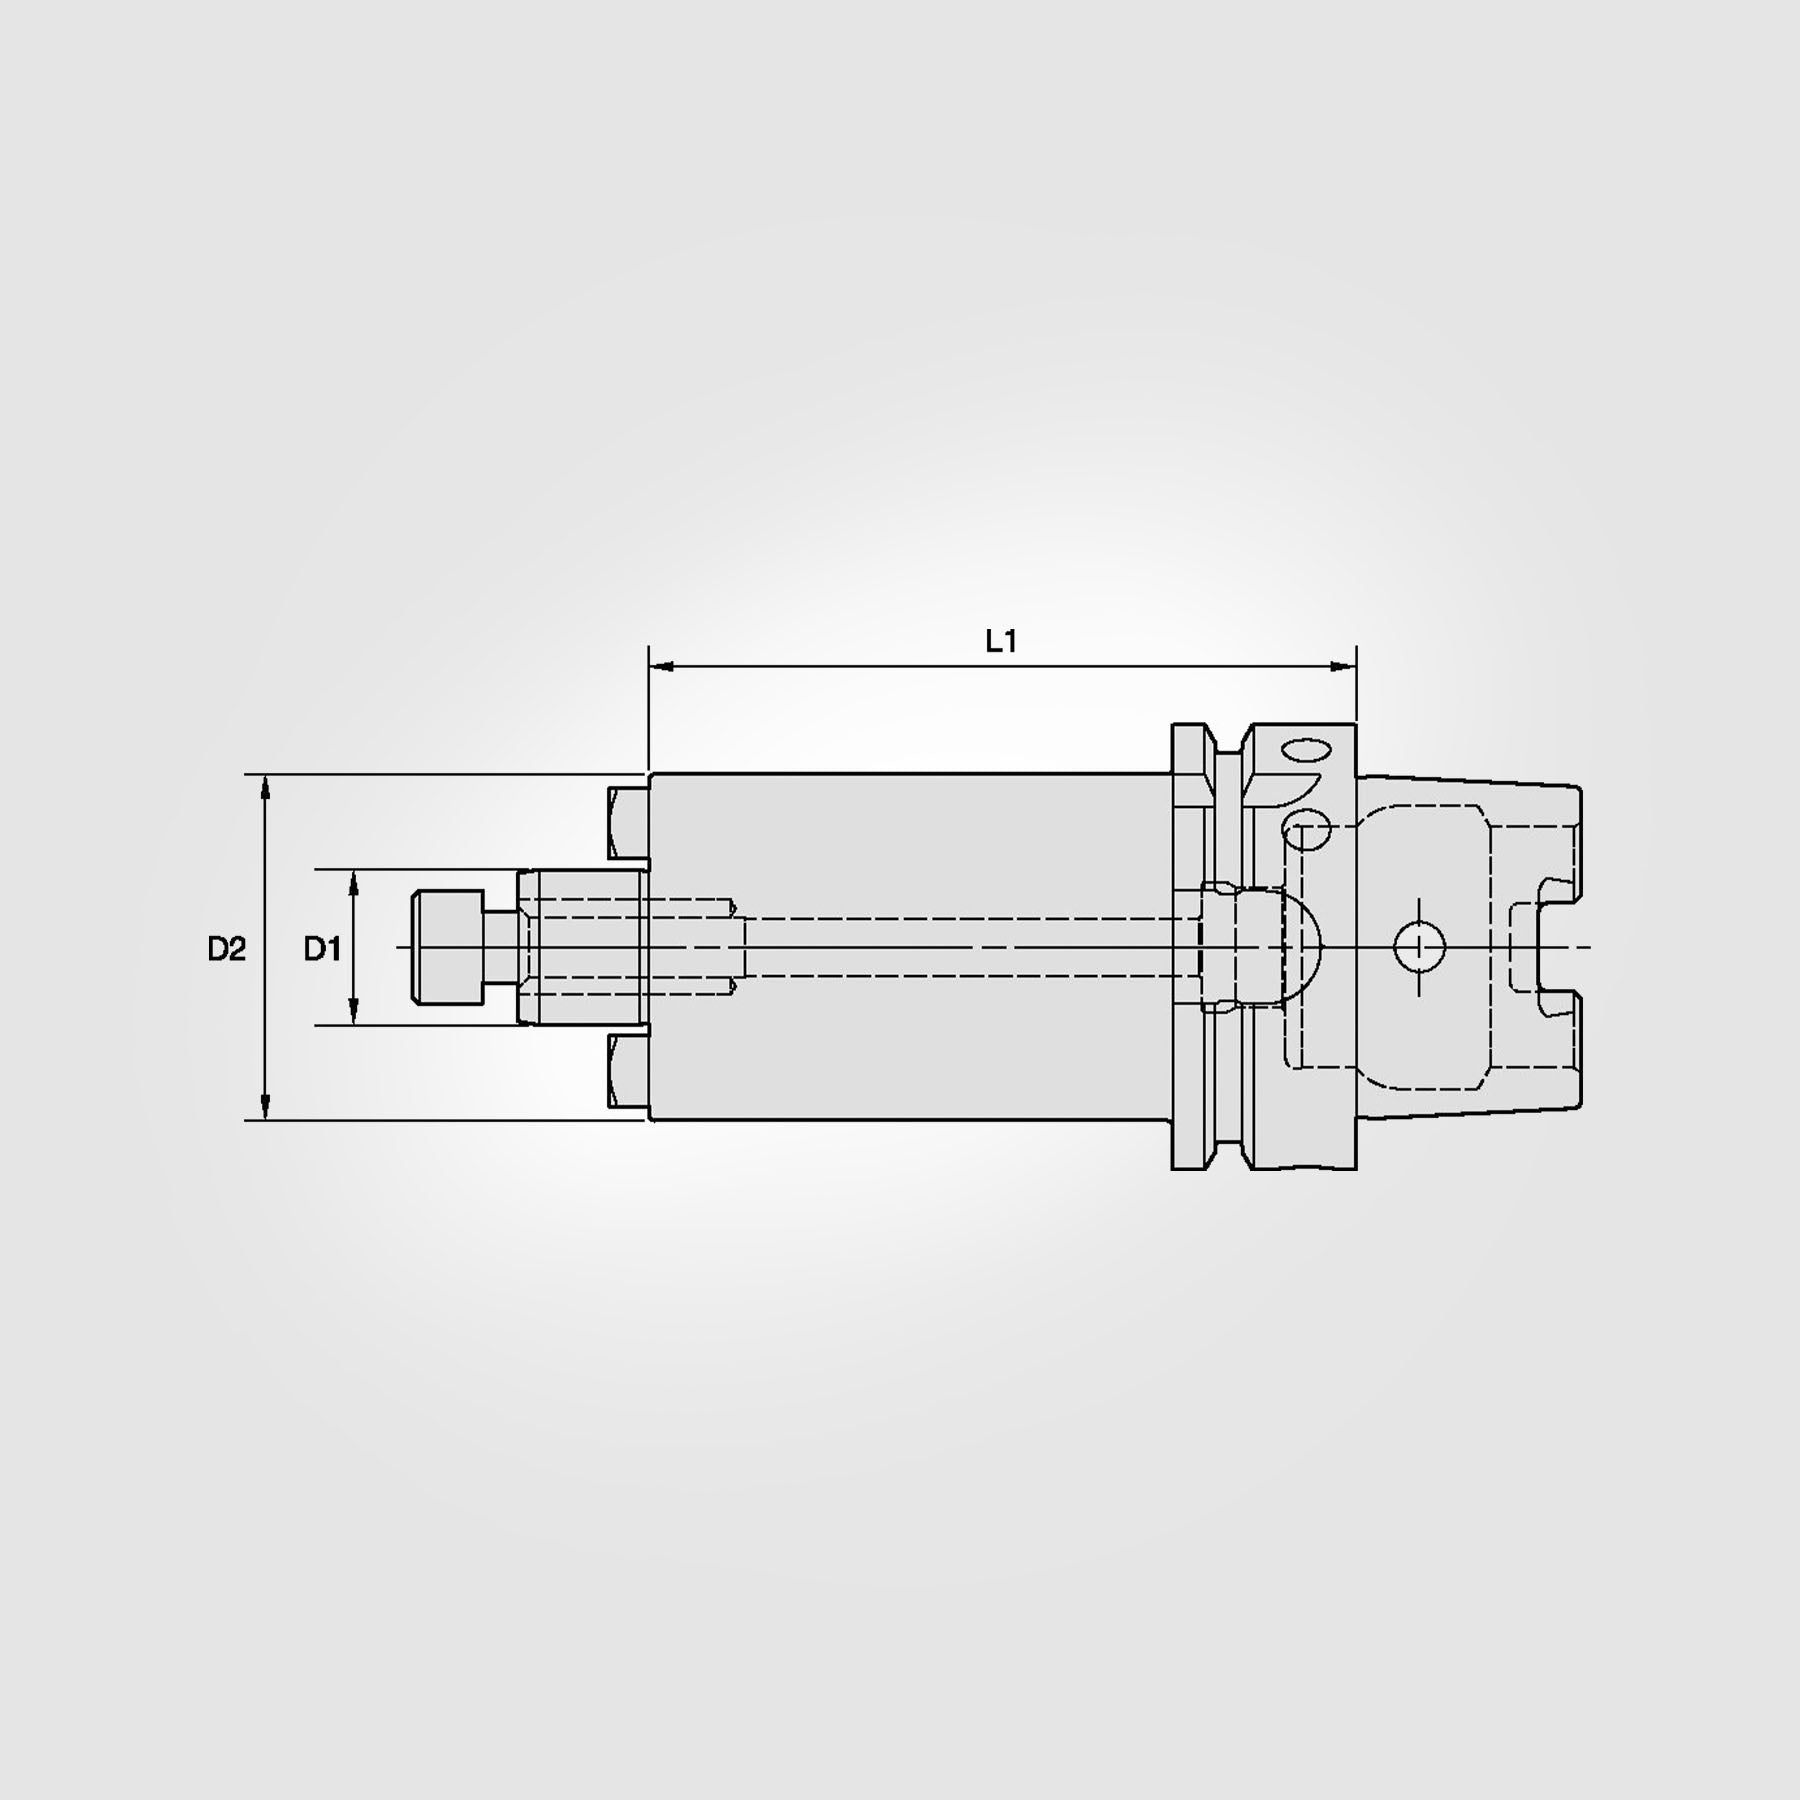 HSK100A Taper Shank 40mm Shell Mill Adapter (THROUGH COOLANT) | 3872510